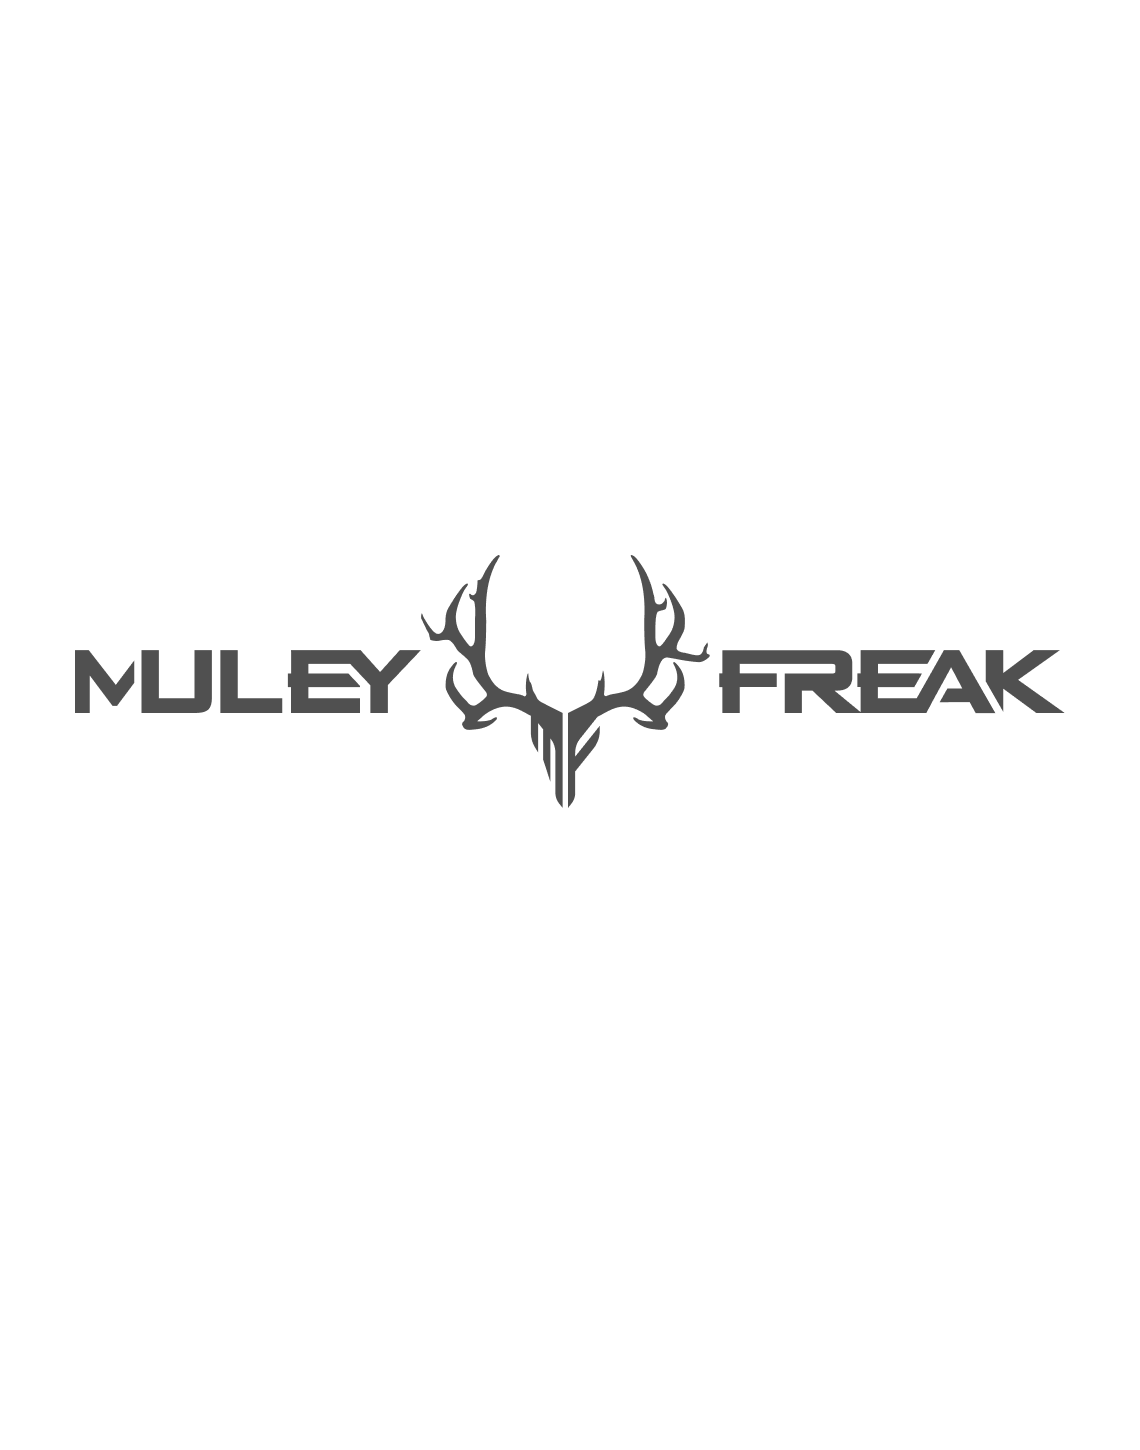 Muley Freak Stretched Decal - Muley Freak